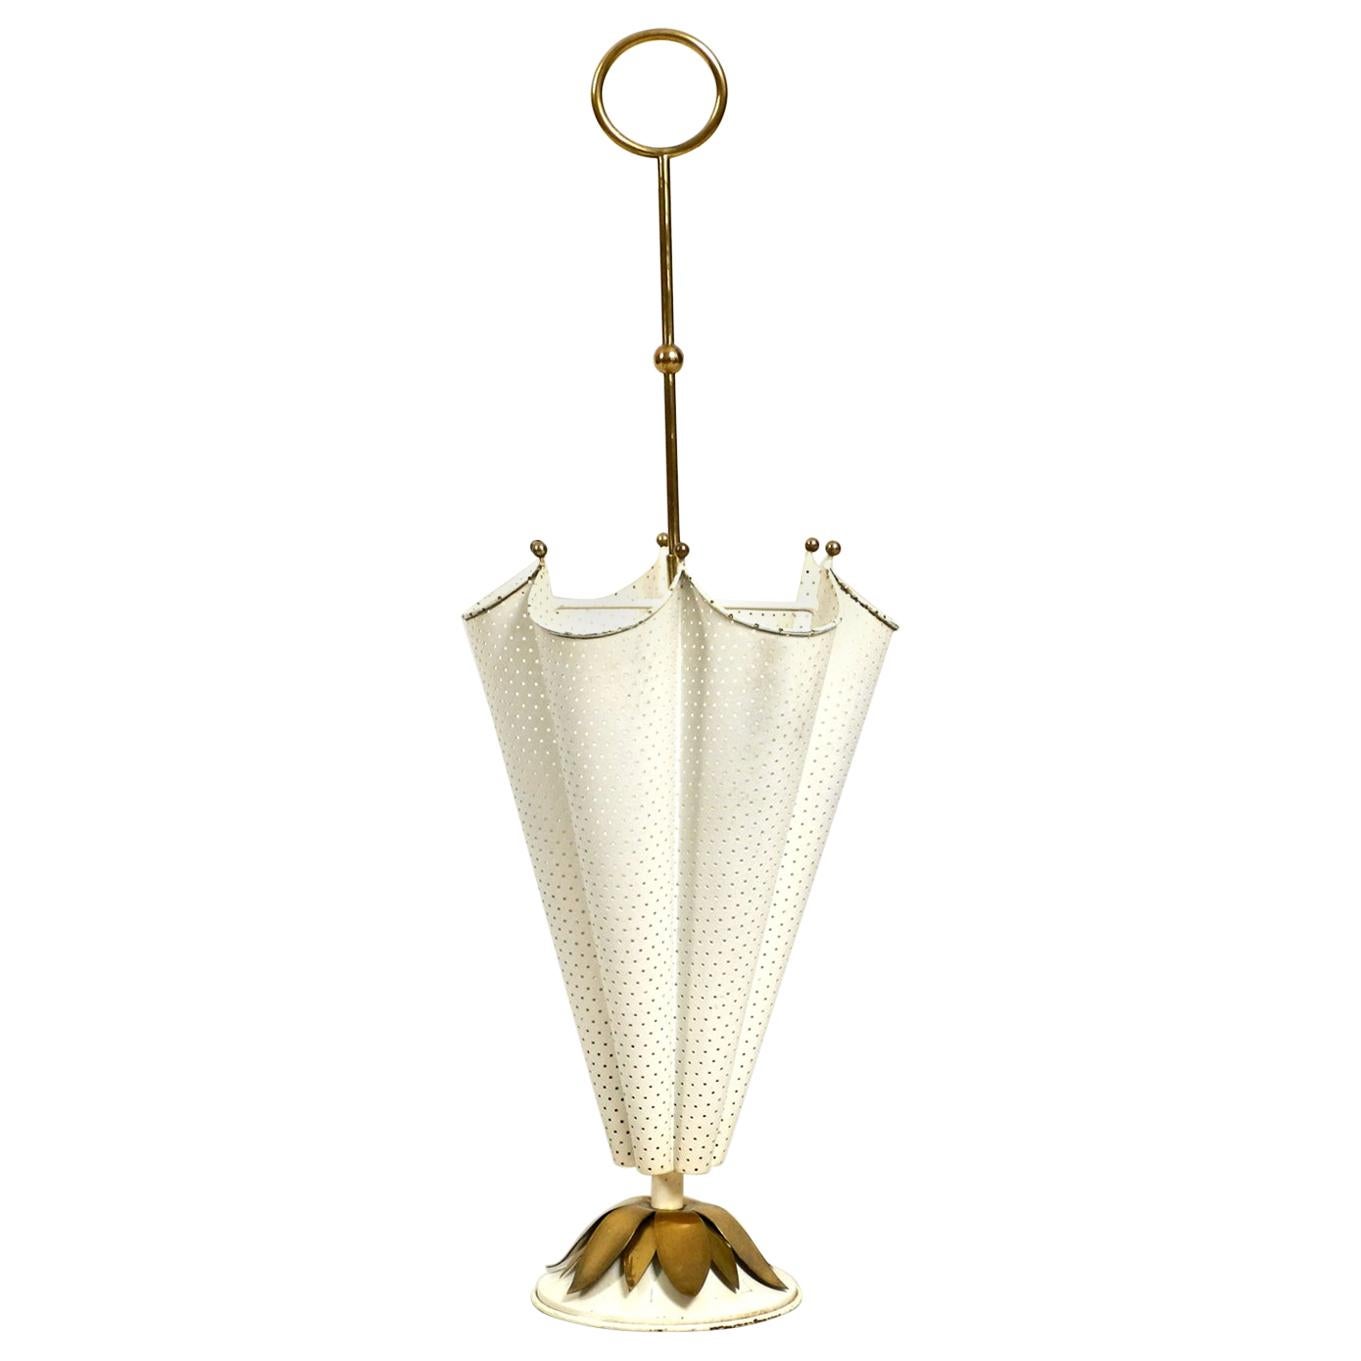 Stunning Rare Midcentury Perforated Brass Umbrella Stand